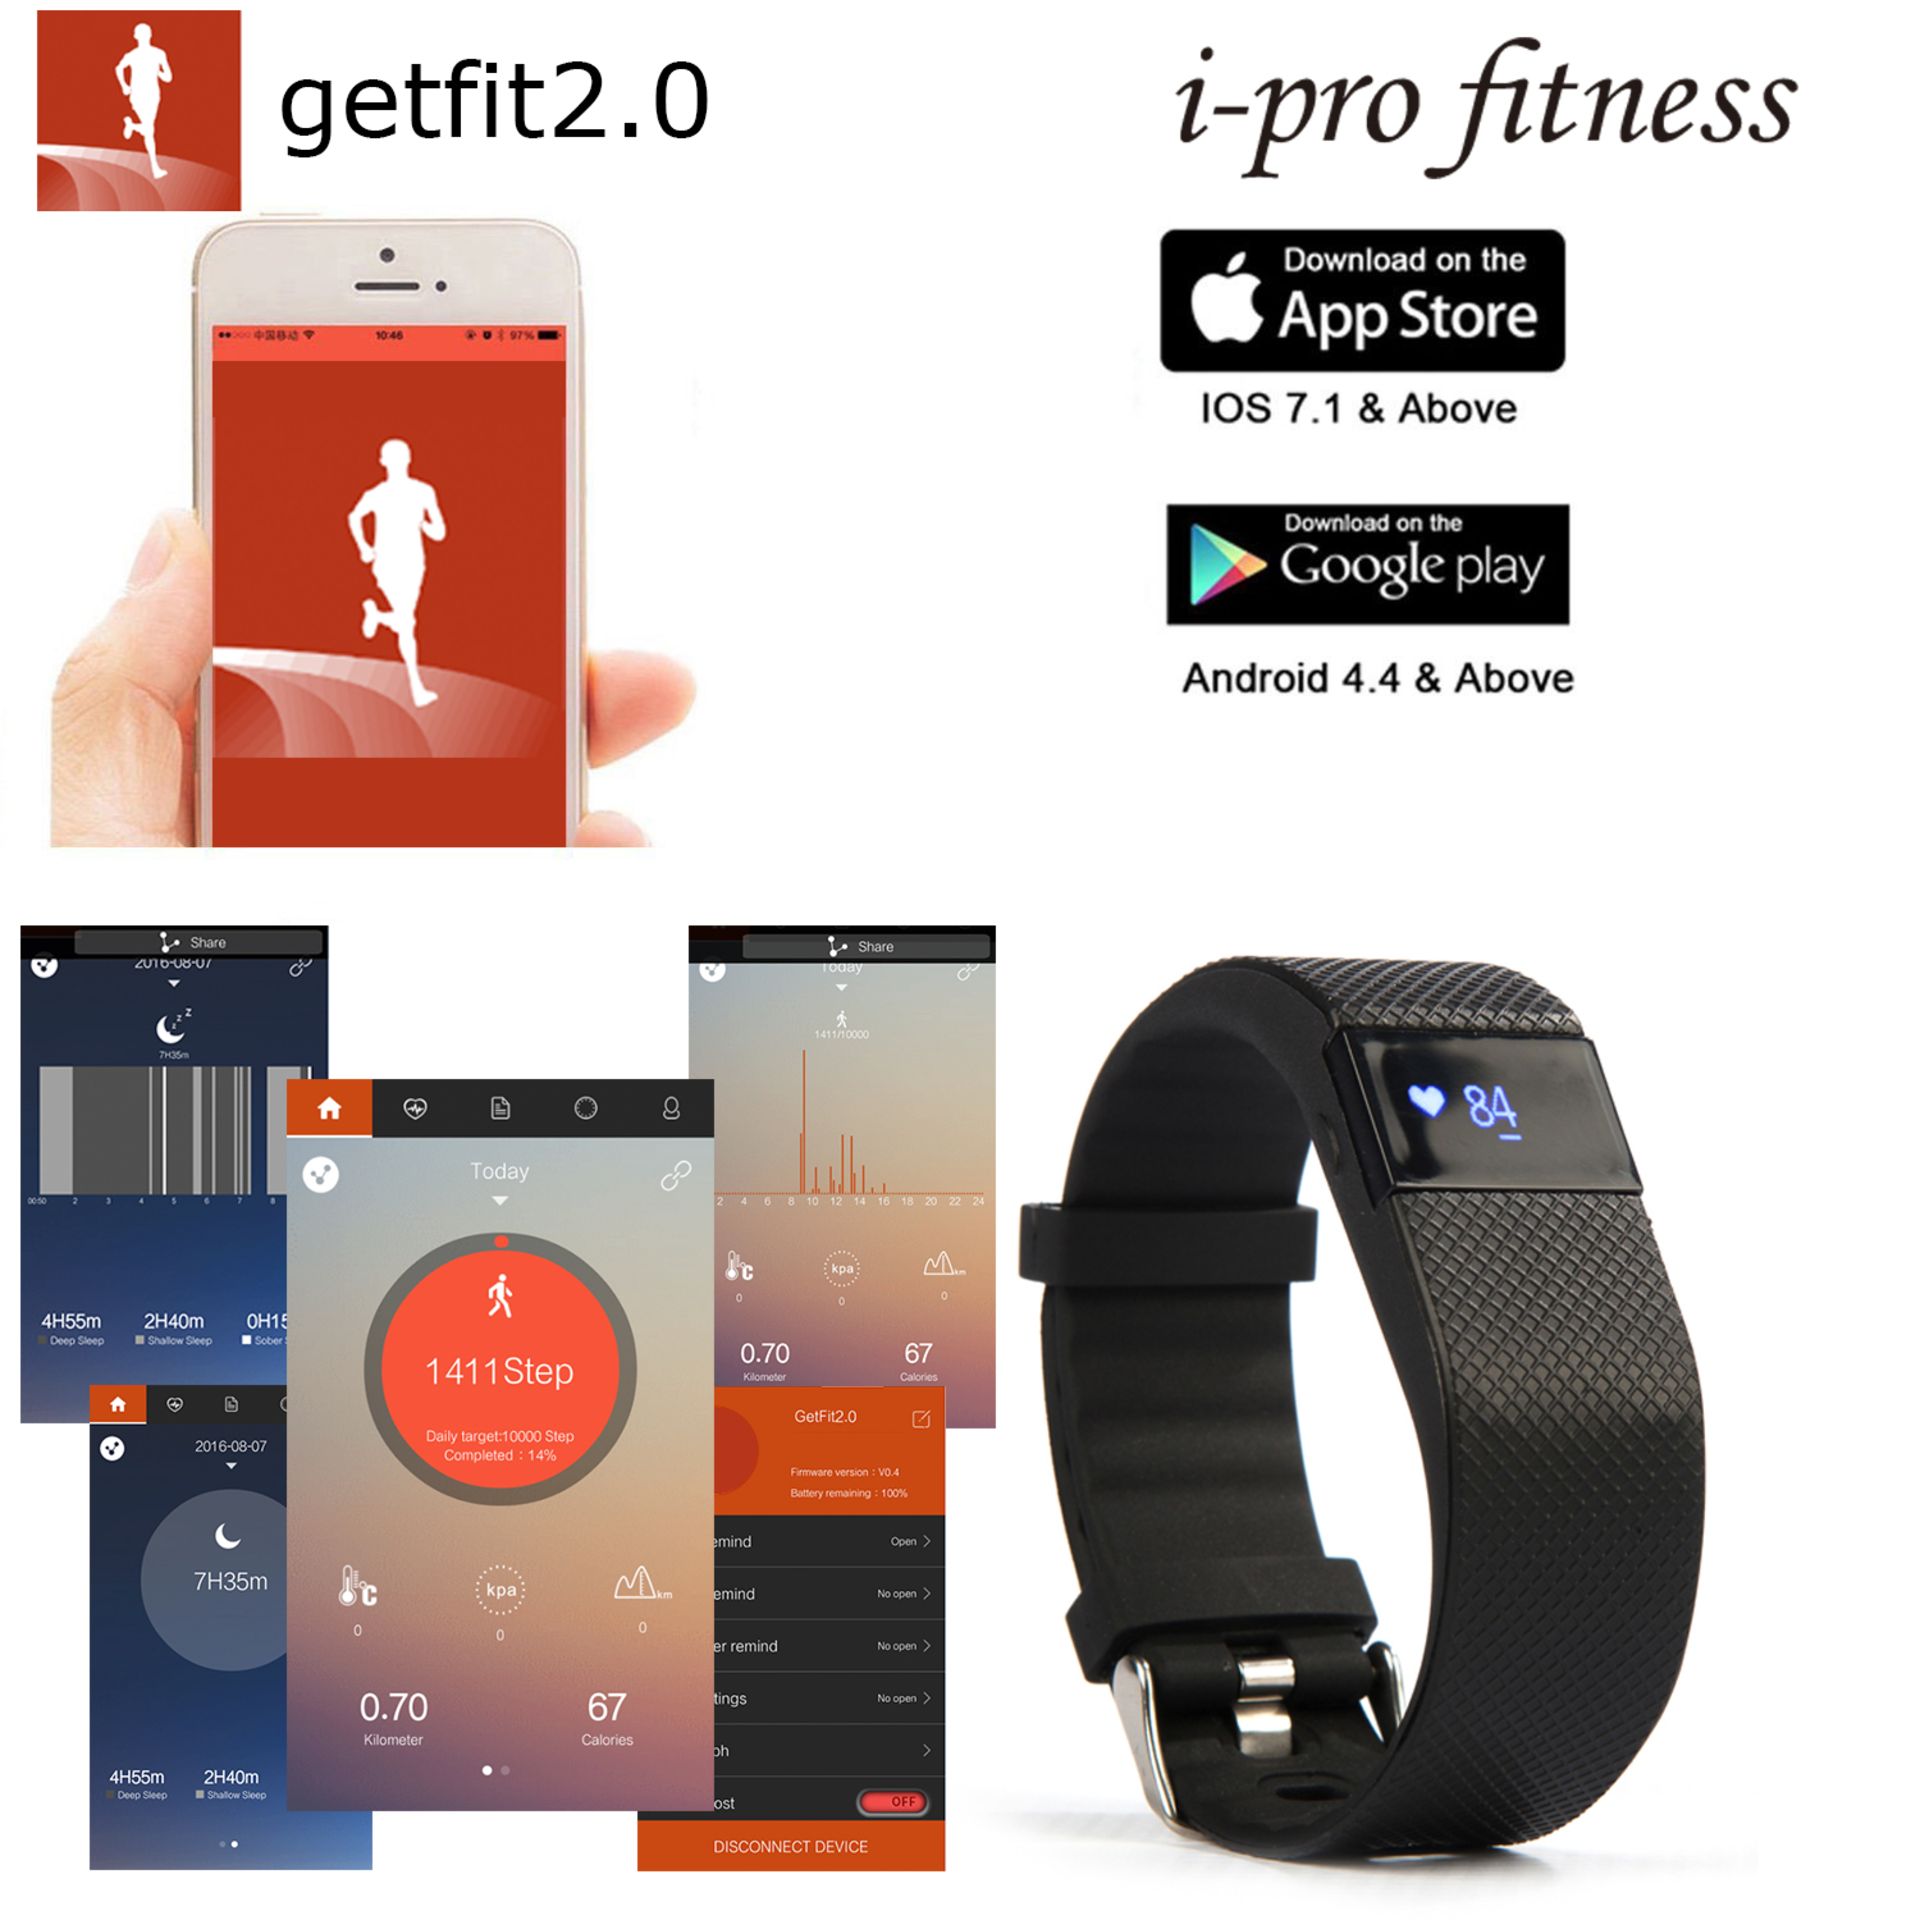 10x Fitness Tracker i-pro fitness, Bluetooth 4.0 Sports Smart Bracelet. - Image 7 of 8